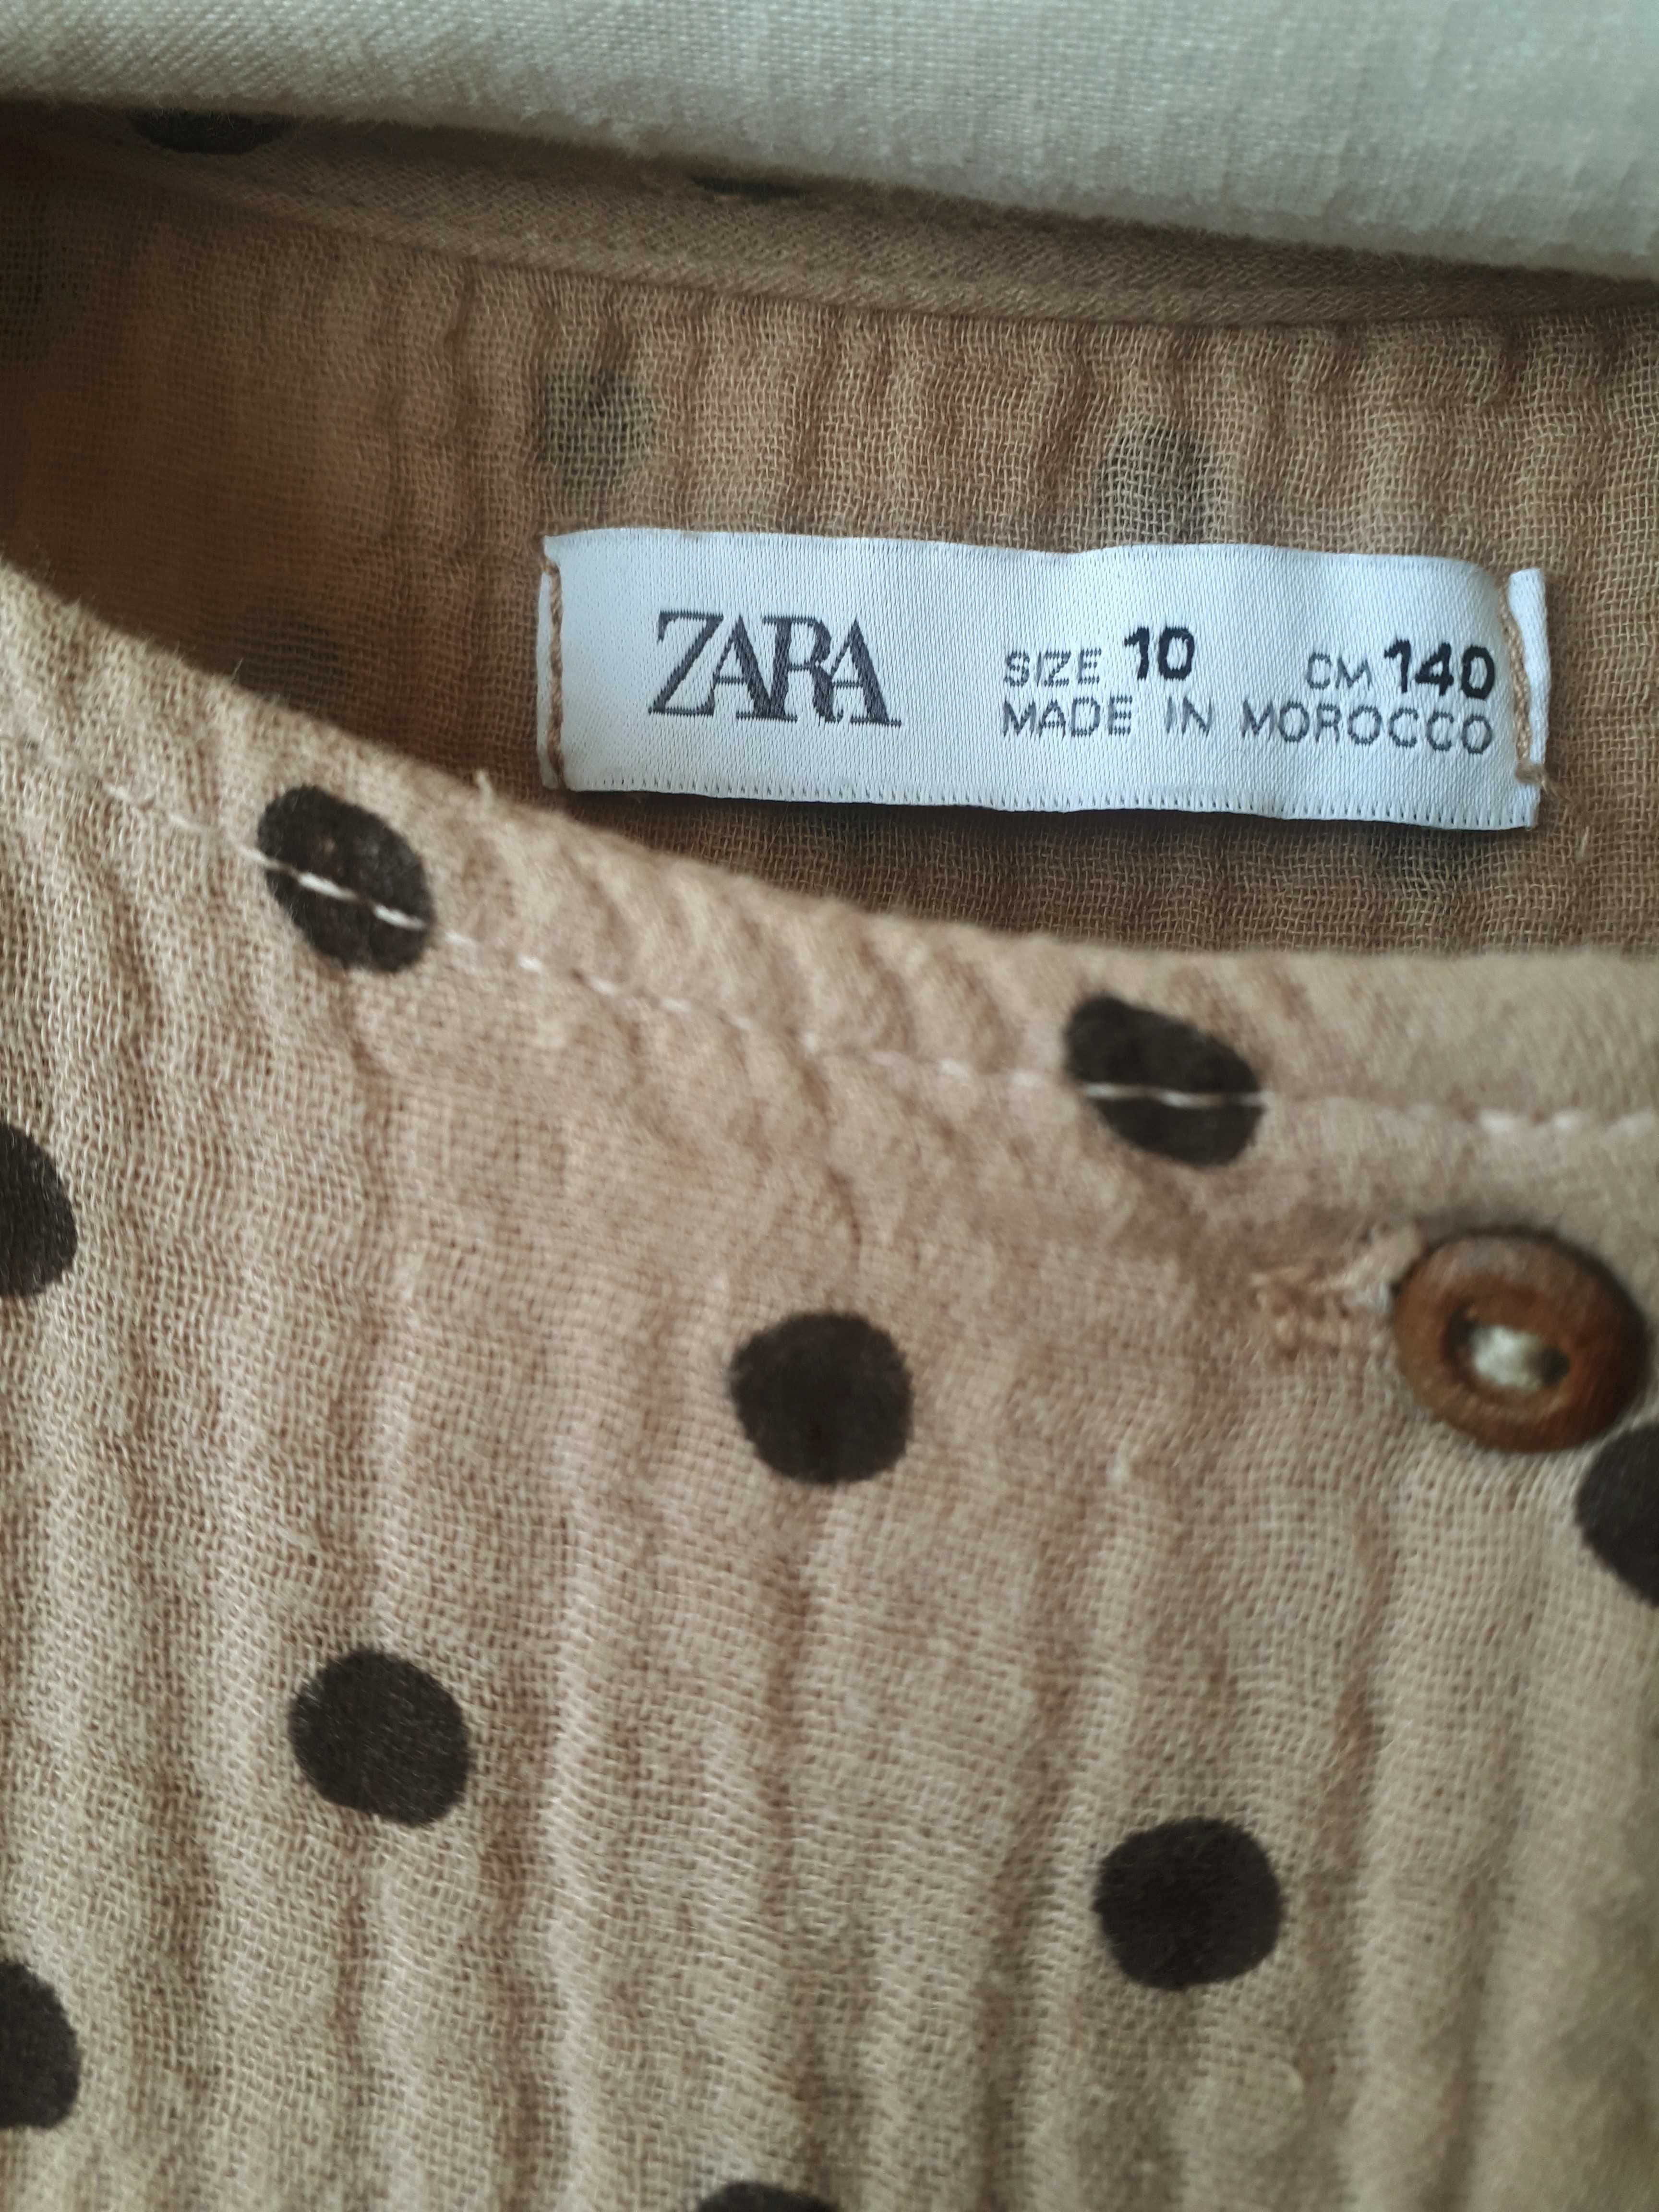 Vestido Zara para 10 anos